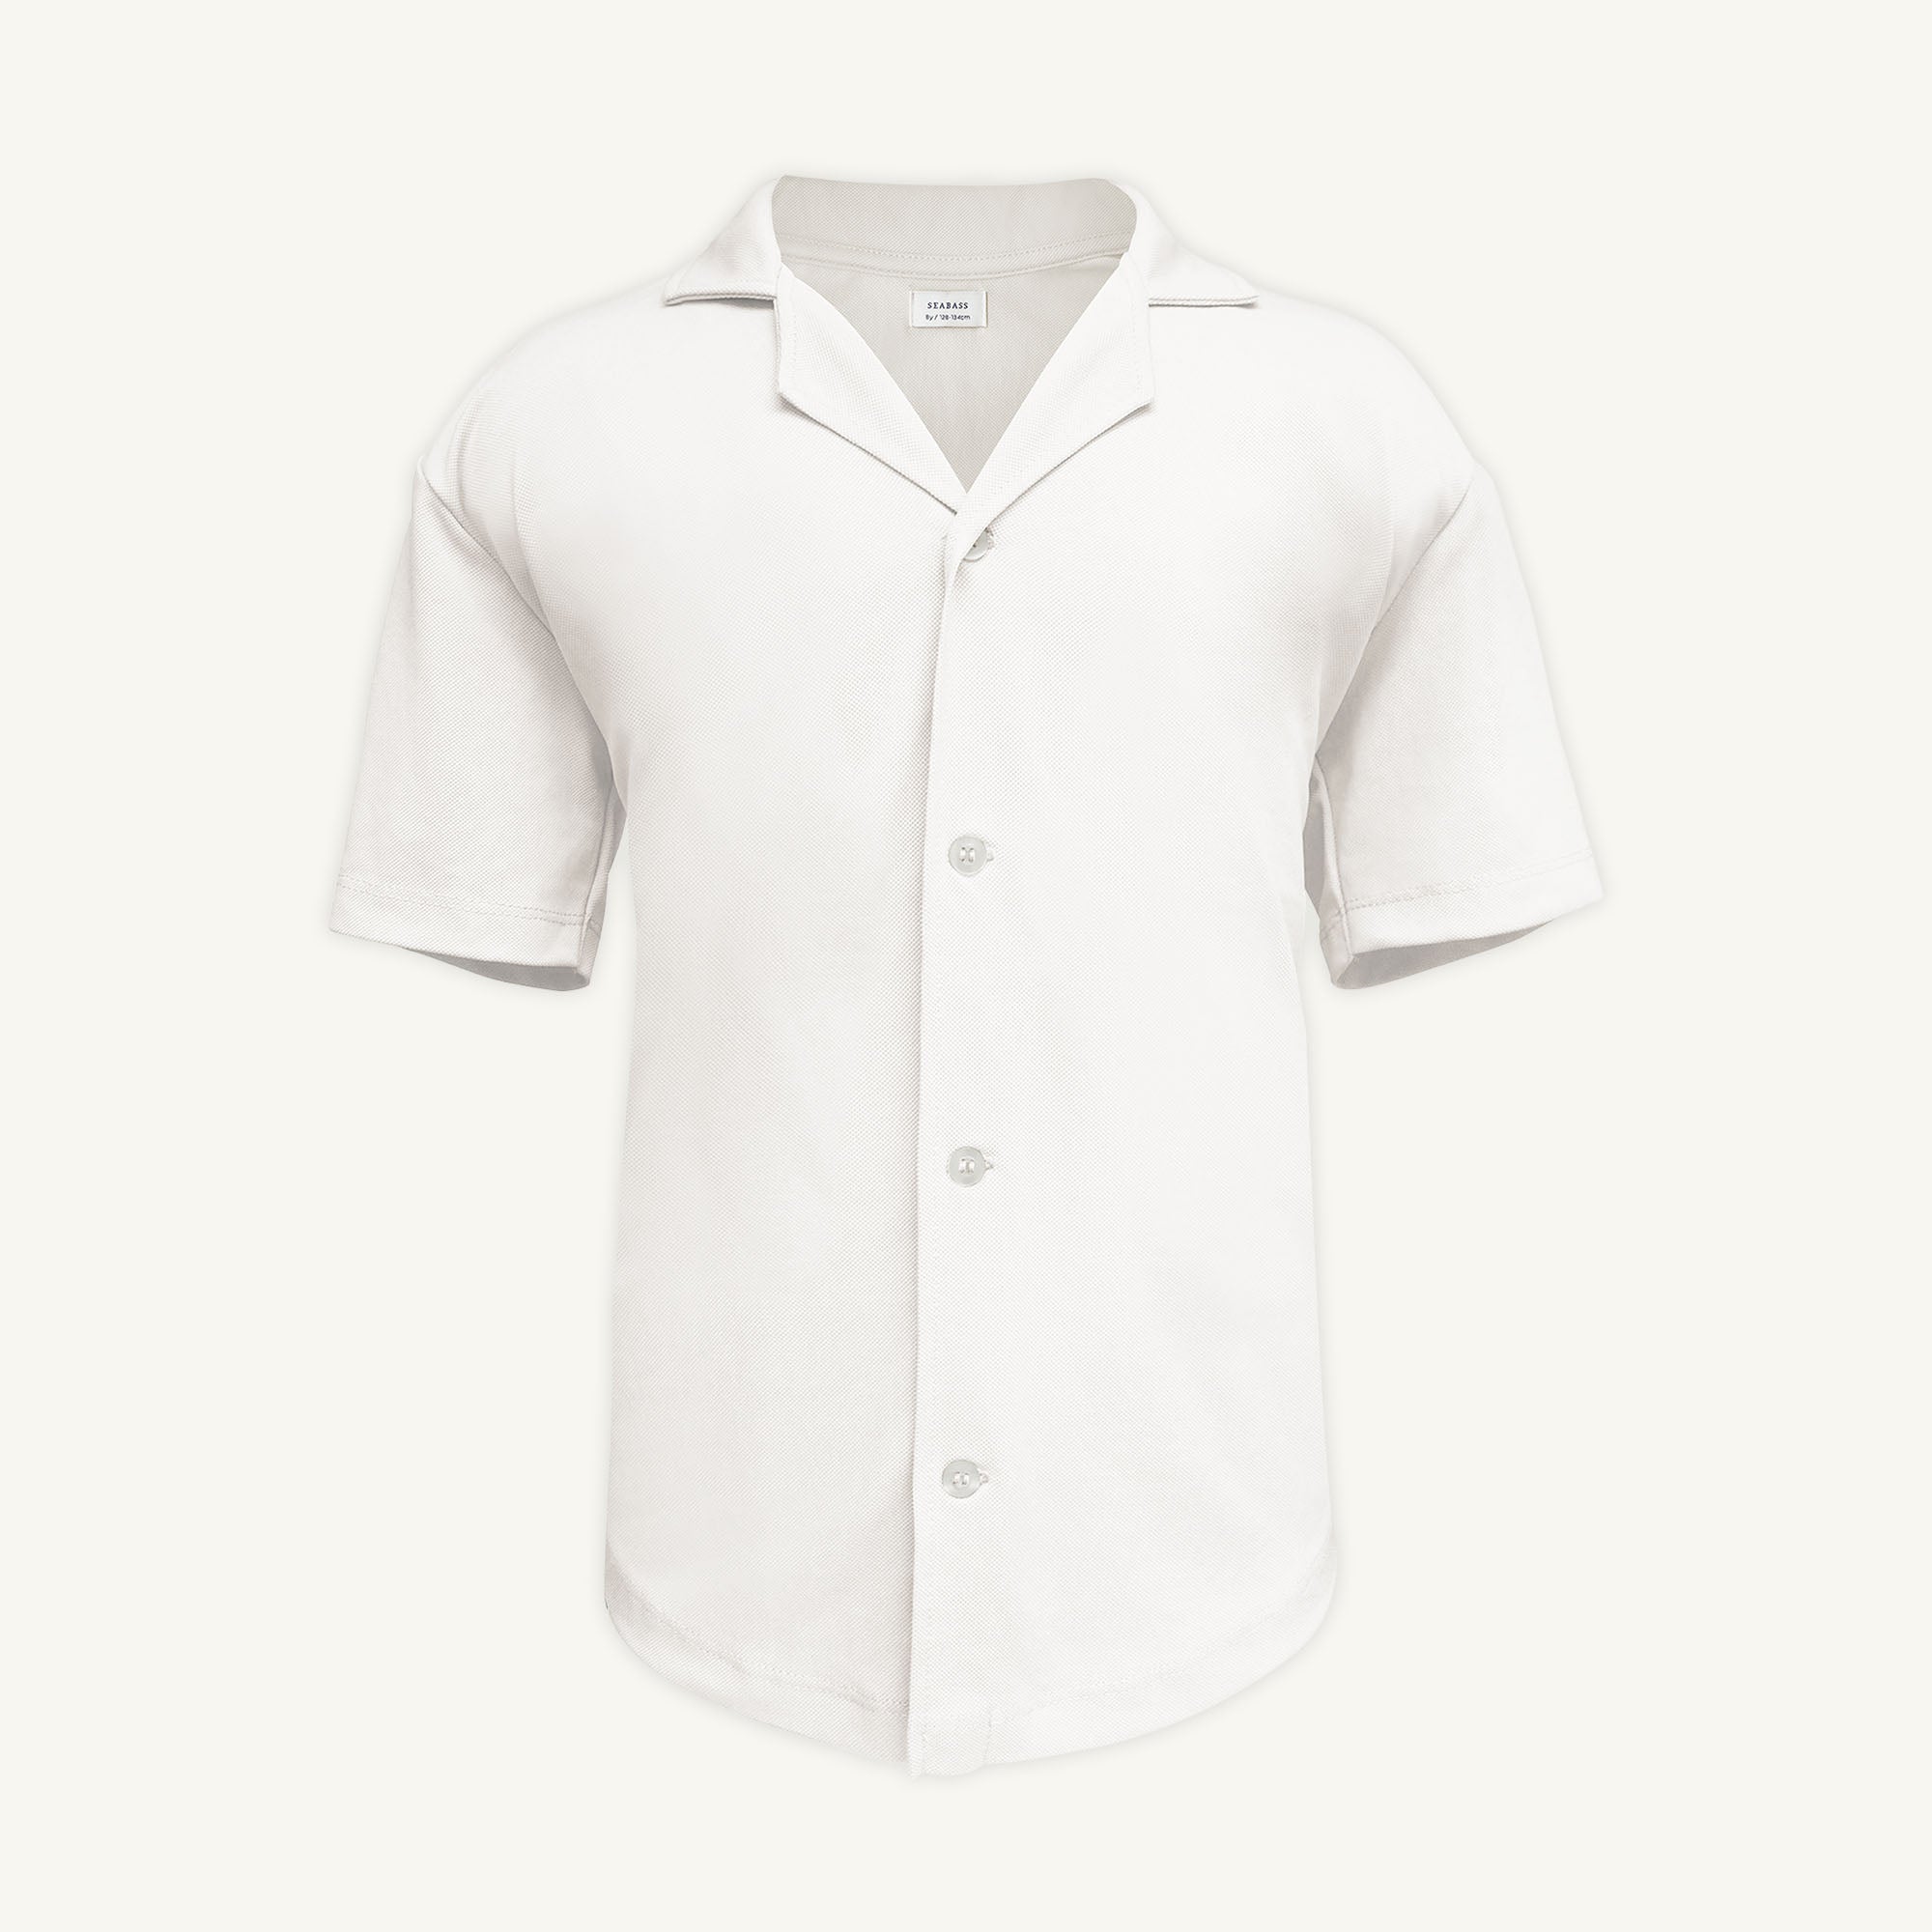 Männer UV Hemd Kurzarm mit UV-Schutz - Weiß